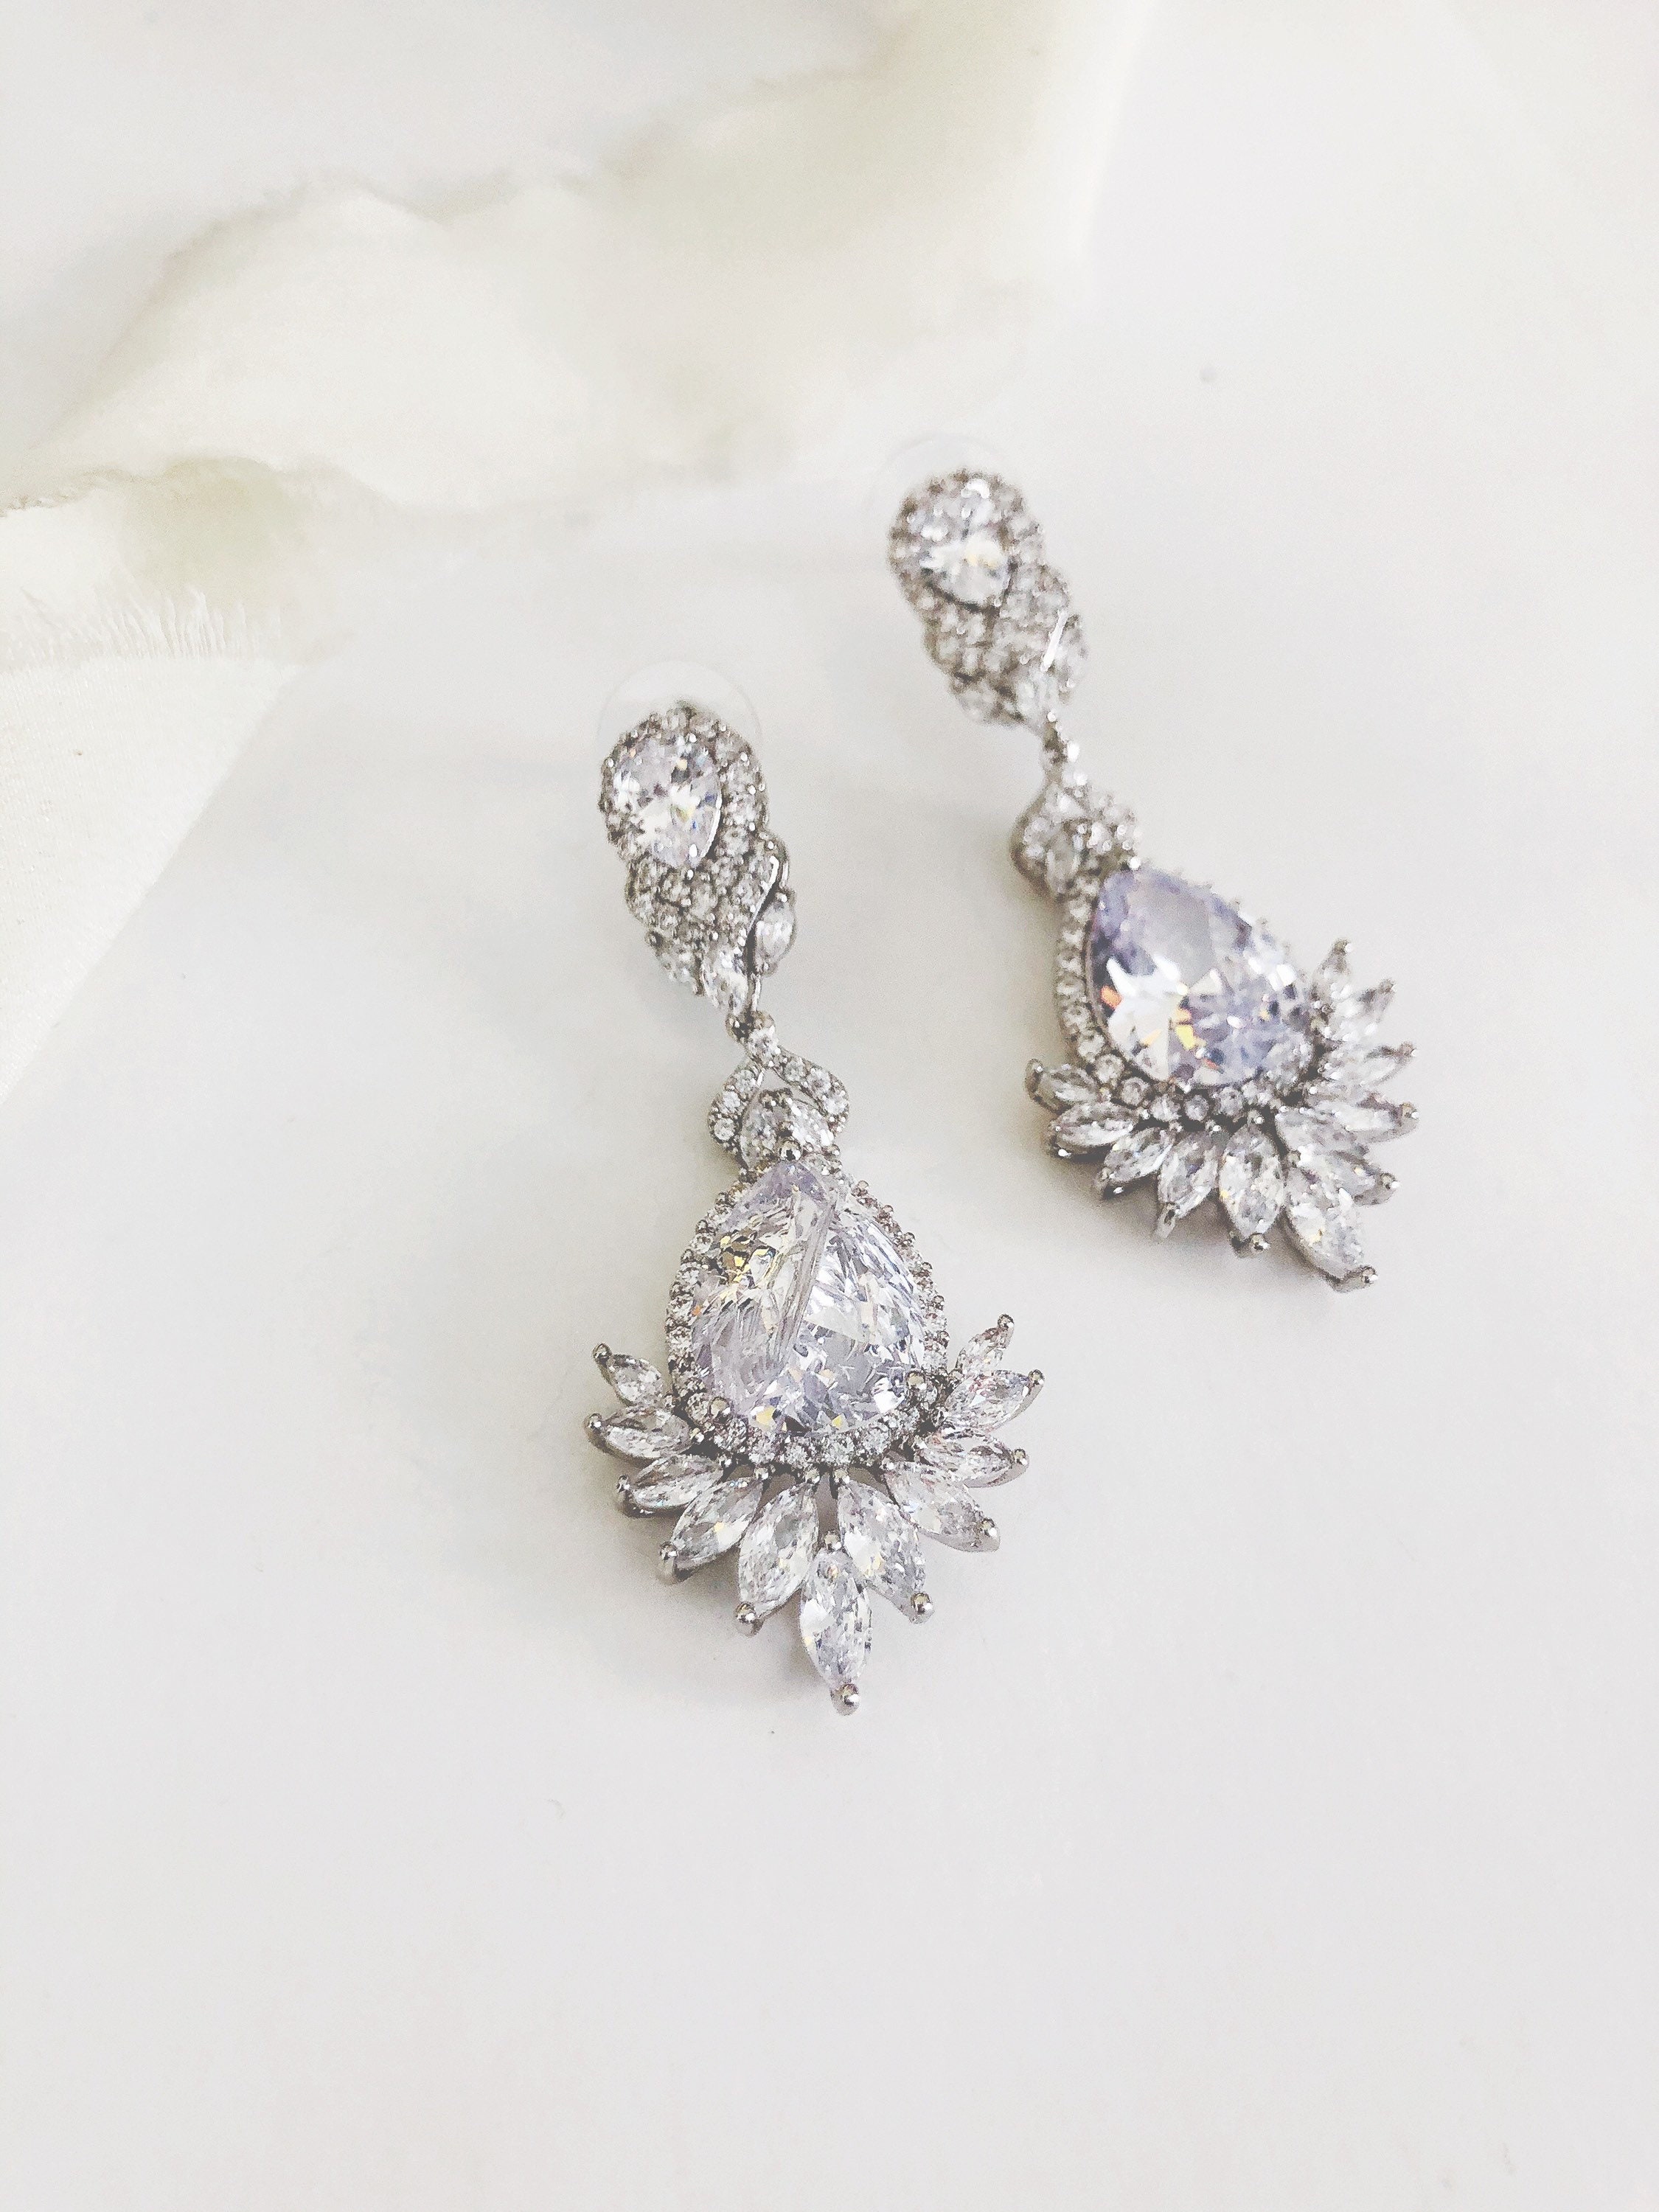 CLIP ON PRISCILLA // Diamond Wedding Earrings Clip-on Drop - Etsy